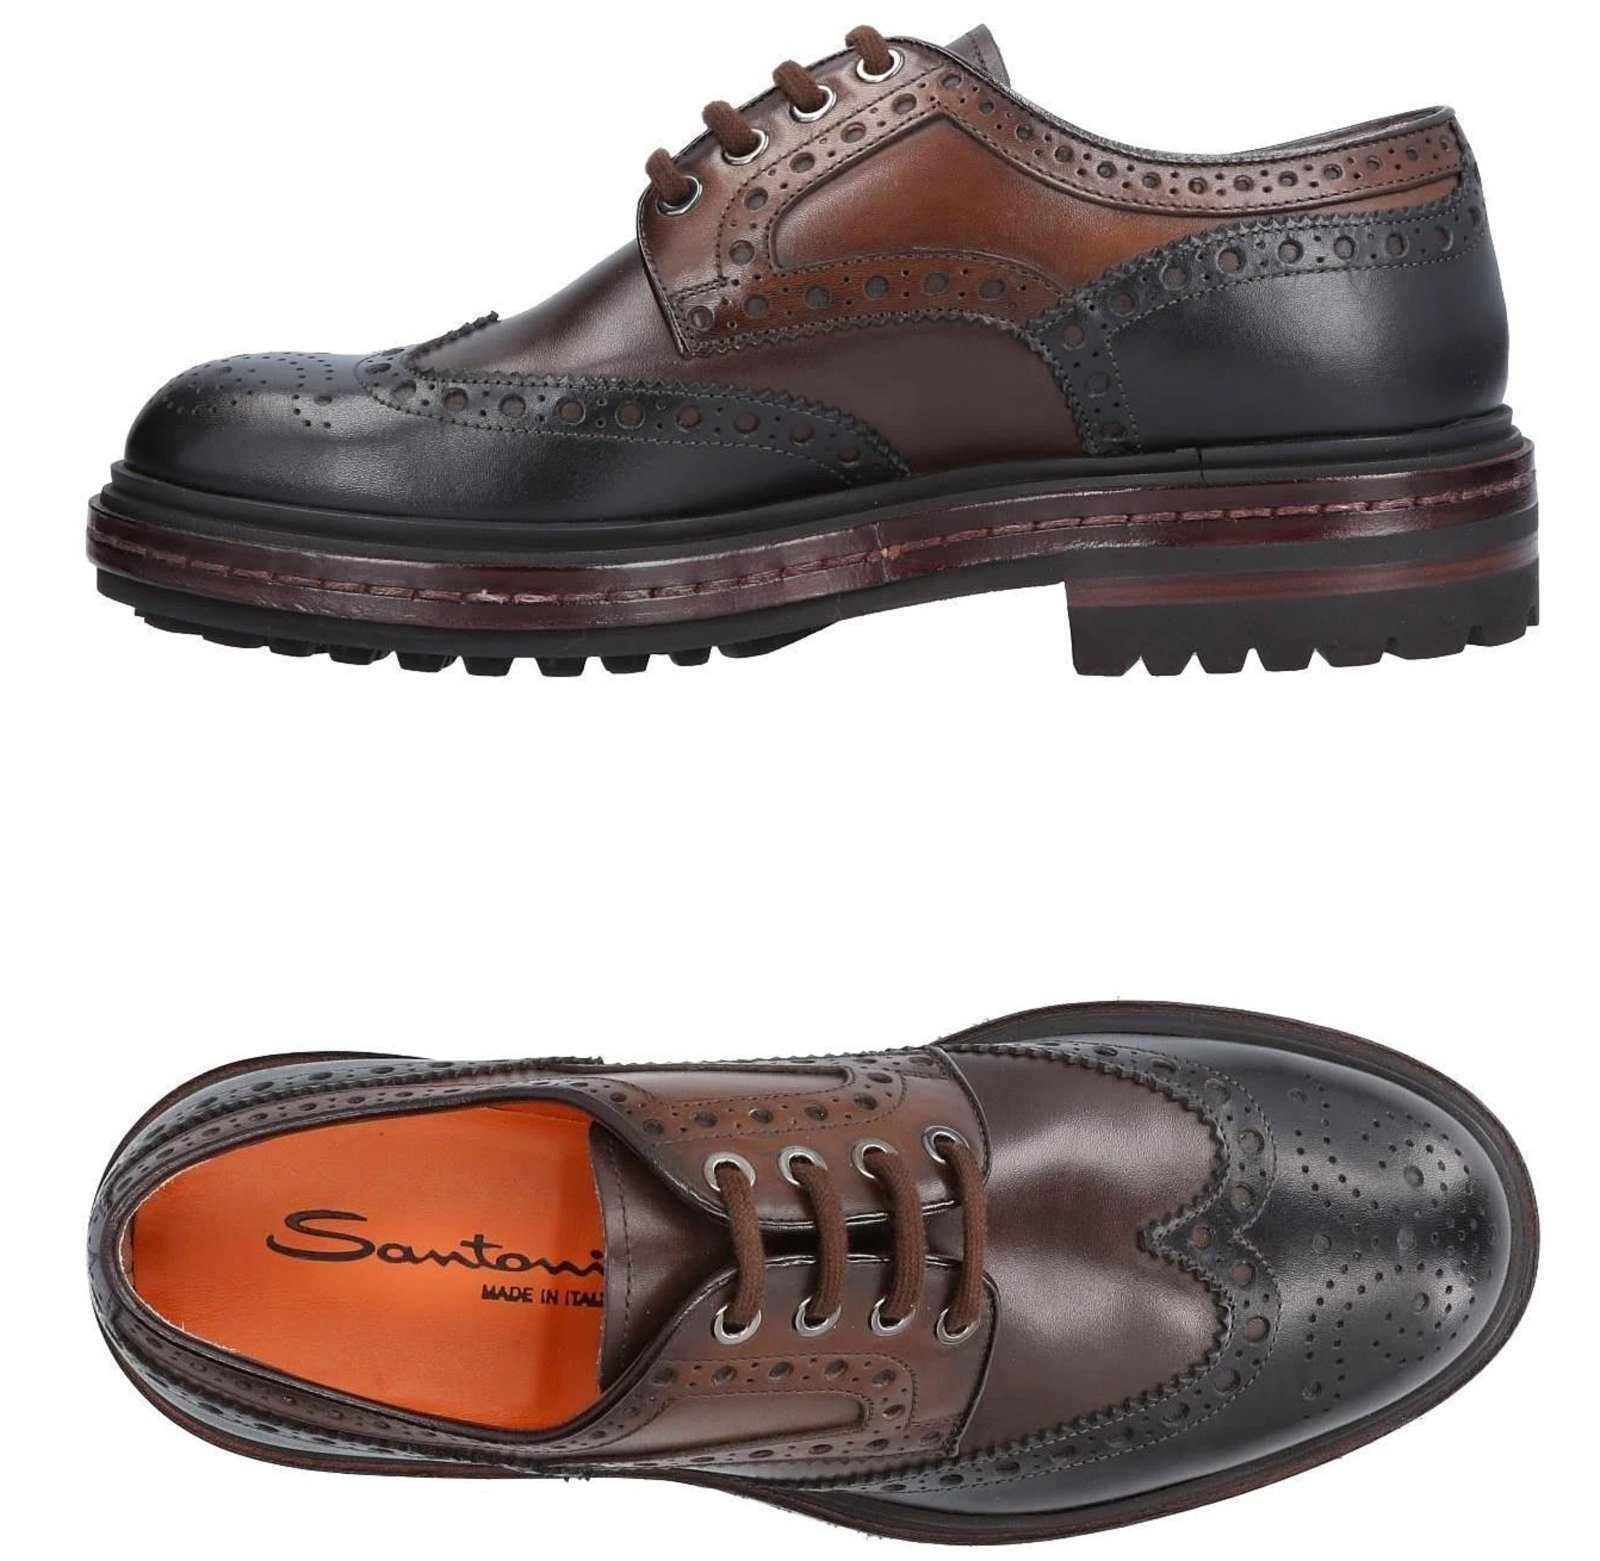 SANTONI Santoni Leder Schnürschuhe Lace-Up Shoes Boots Mokassins Schuhe Halbsc Sneaker